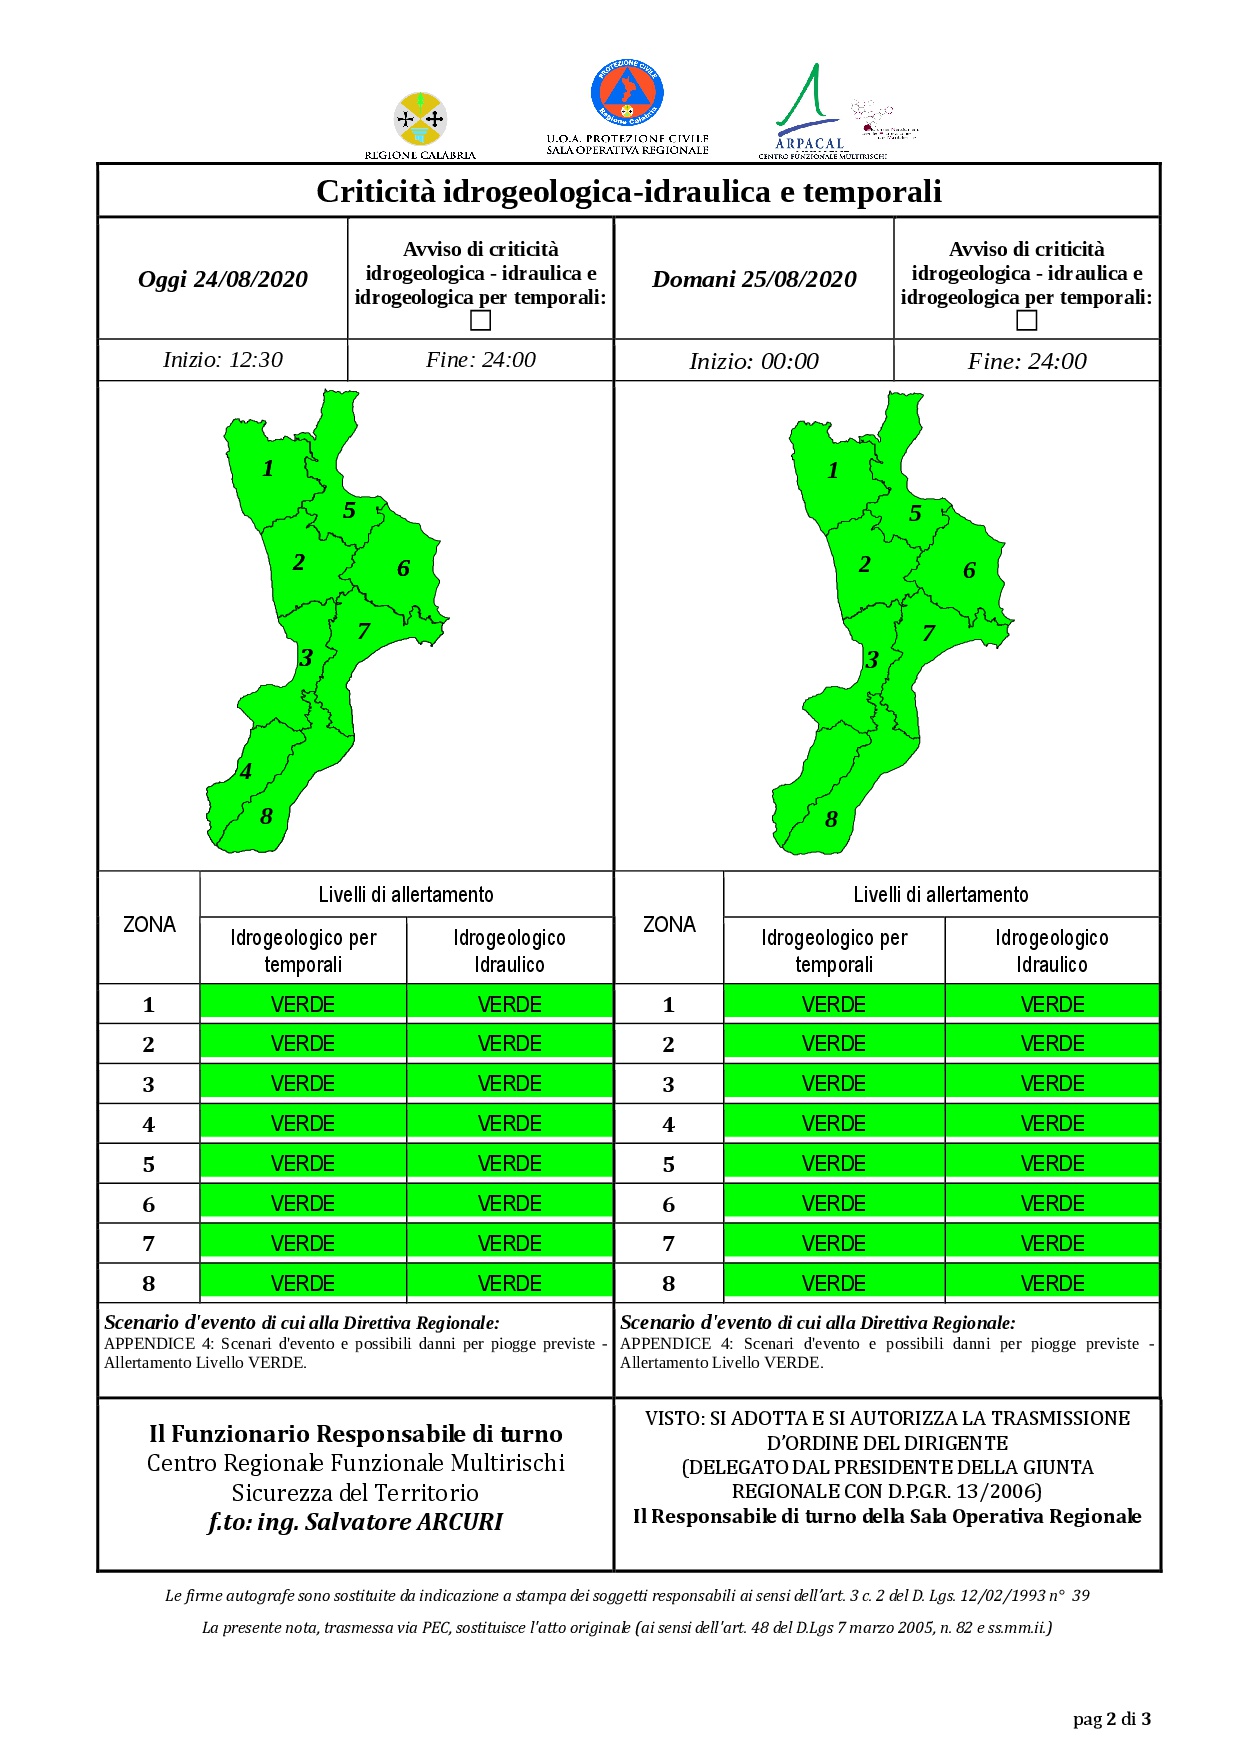 Criticità idrogeologica-idraulica e temporali in Calabria 24-08-2020